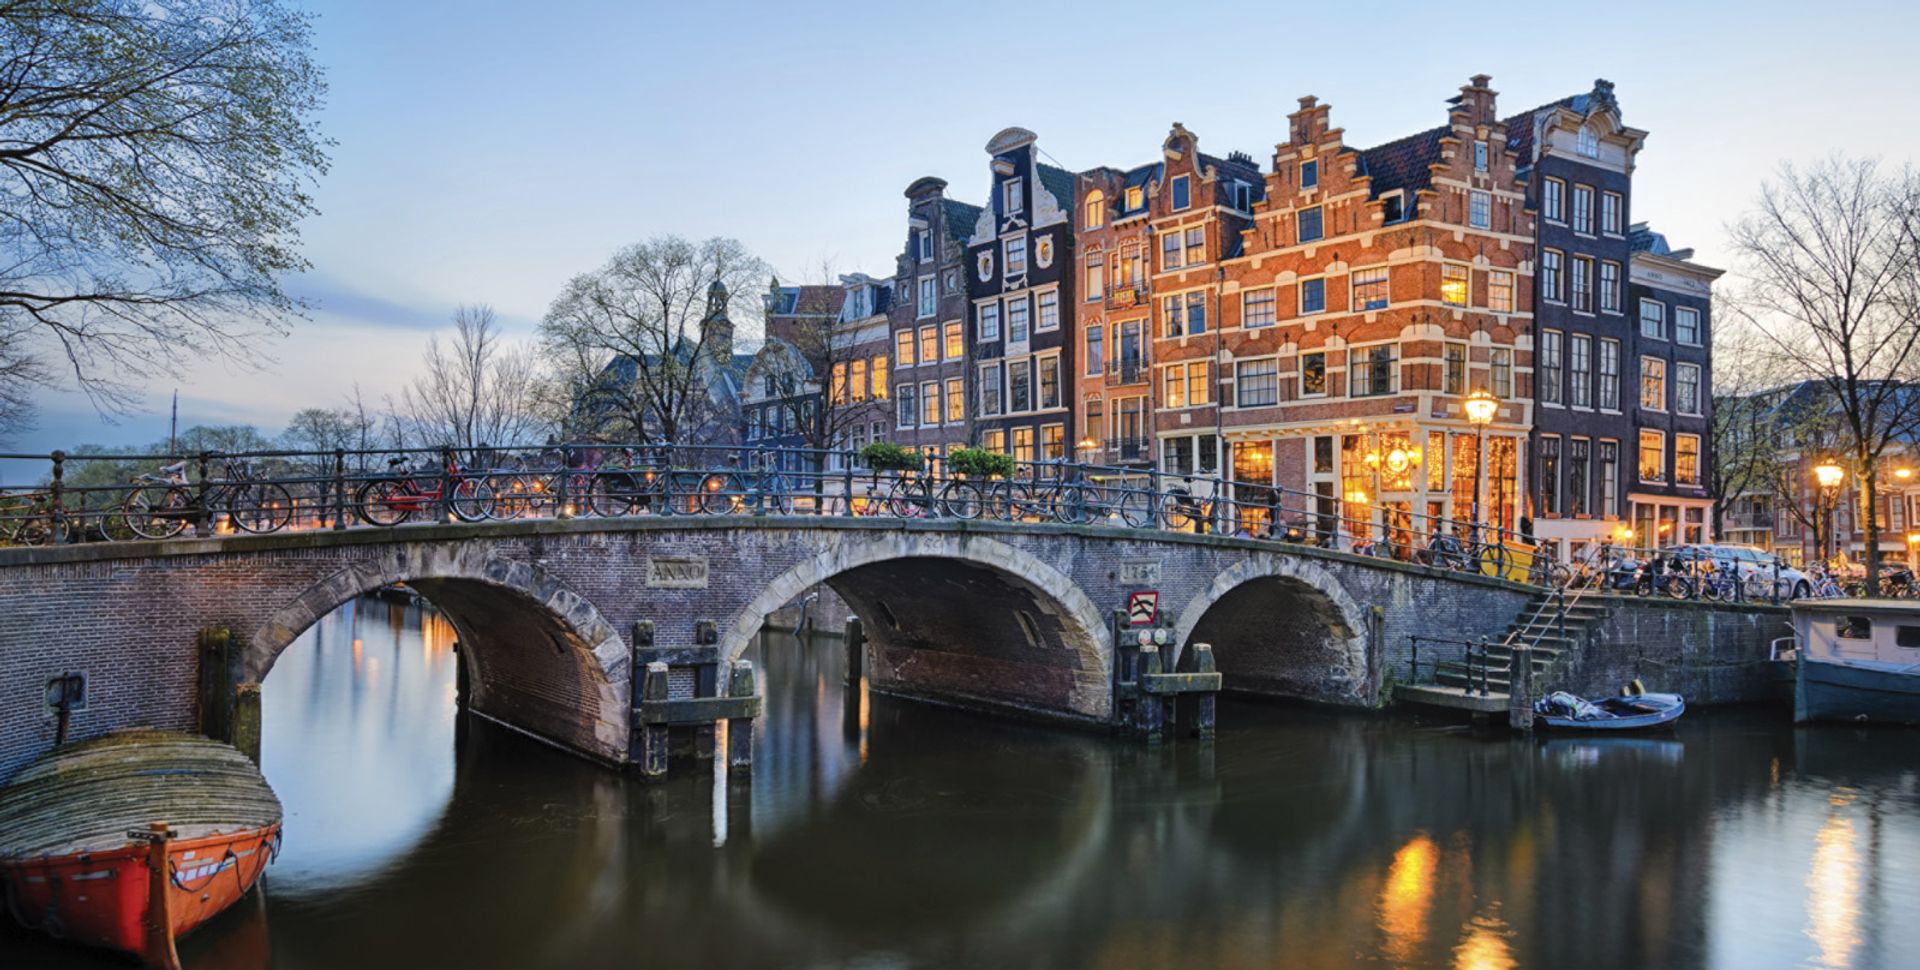 Rembrandt House in Amsterdam © Kristen Van Santen